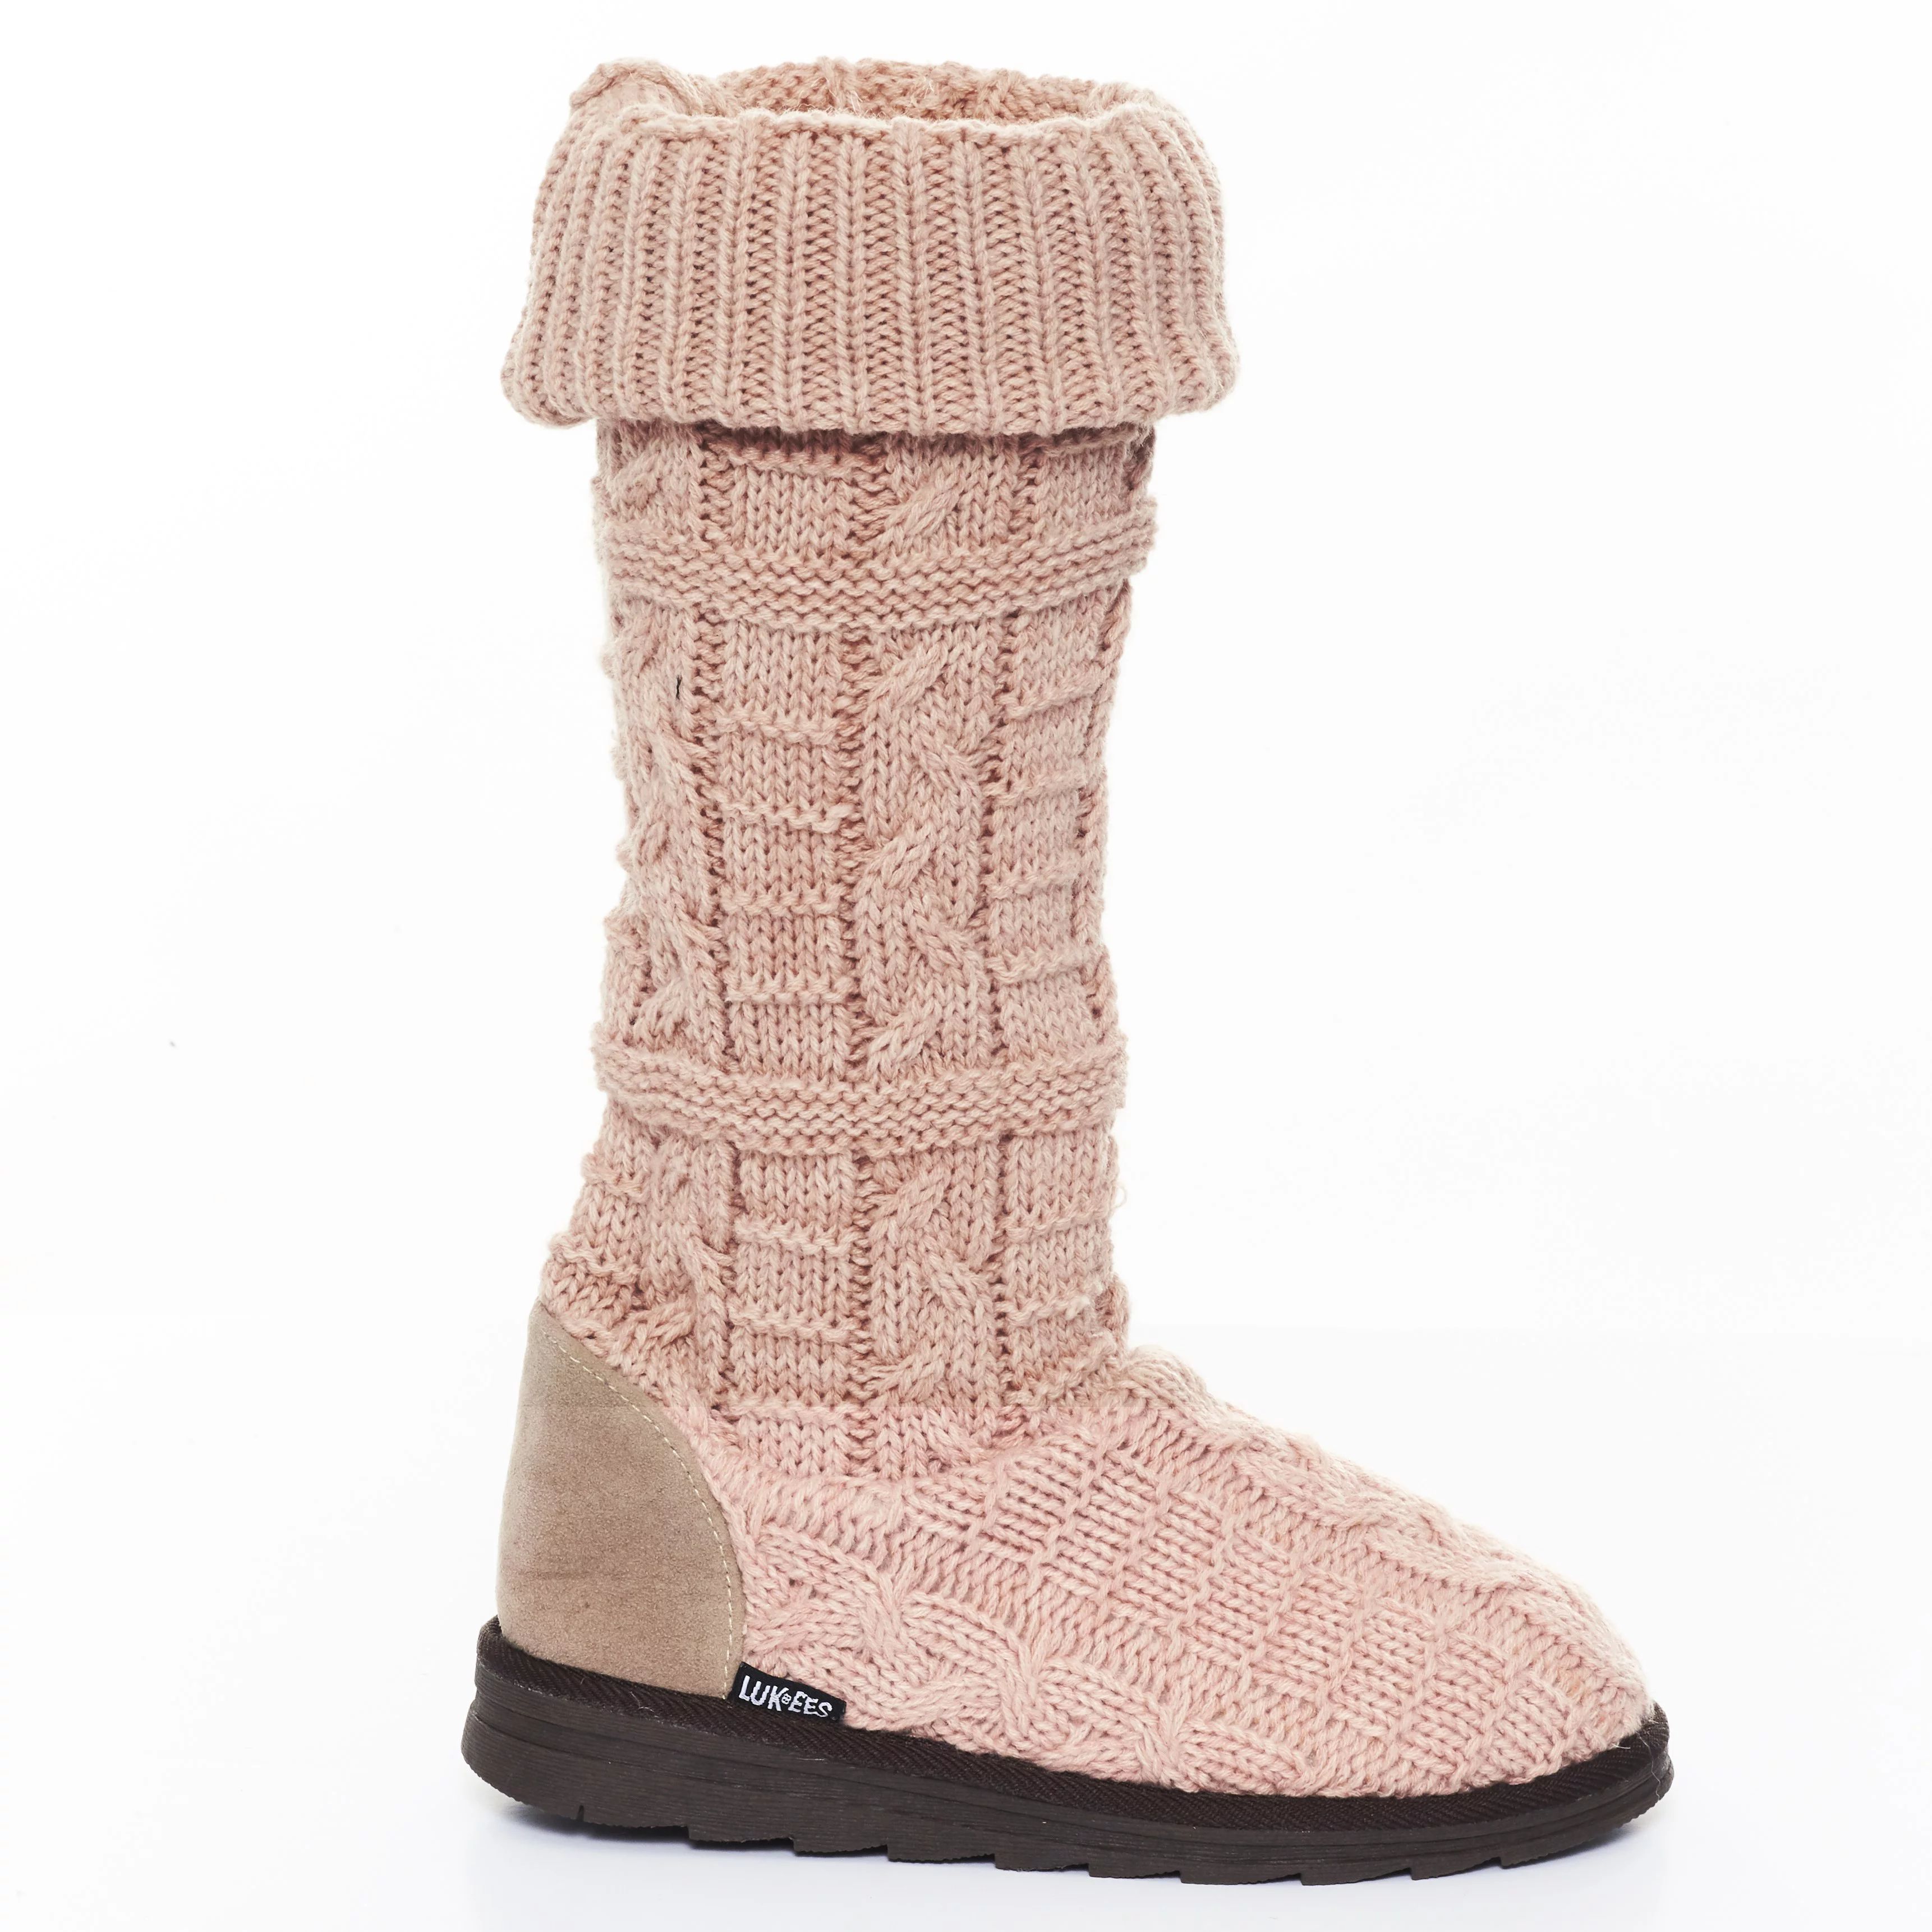 Women's Knit Sweater Boots - LUK-EES – Pink - 9 | Walmart (US)